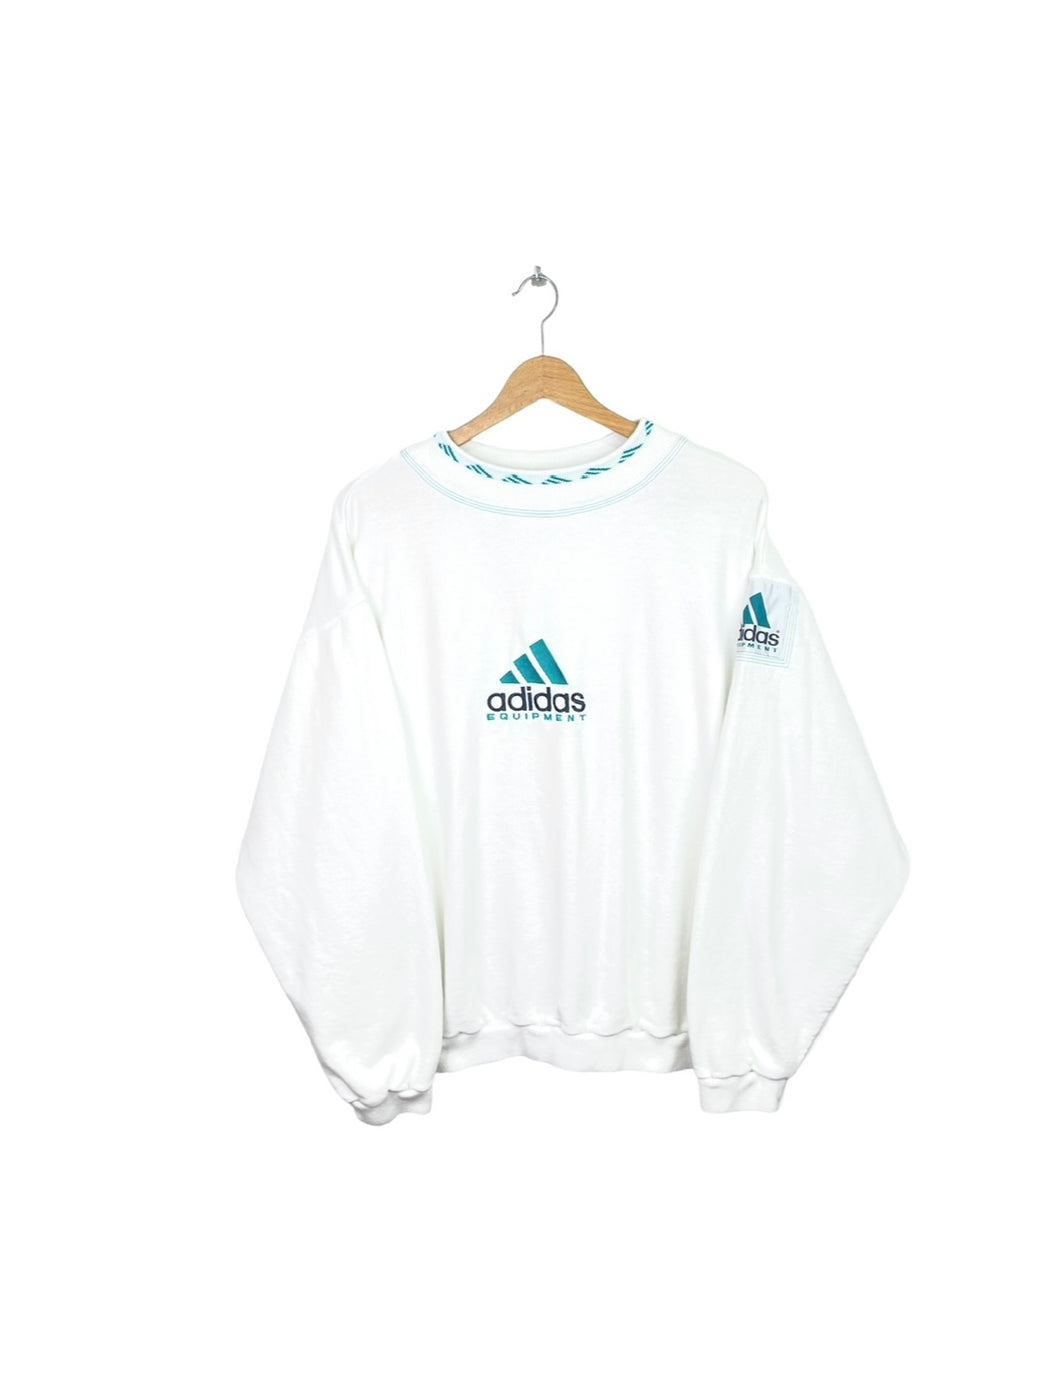 Adidas Equipment Sweatshirt - XLarge